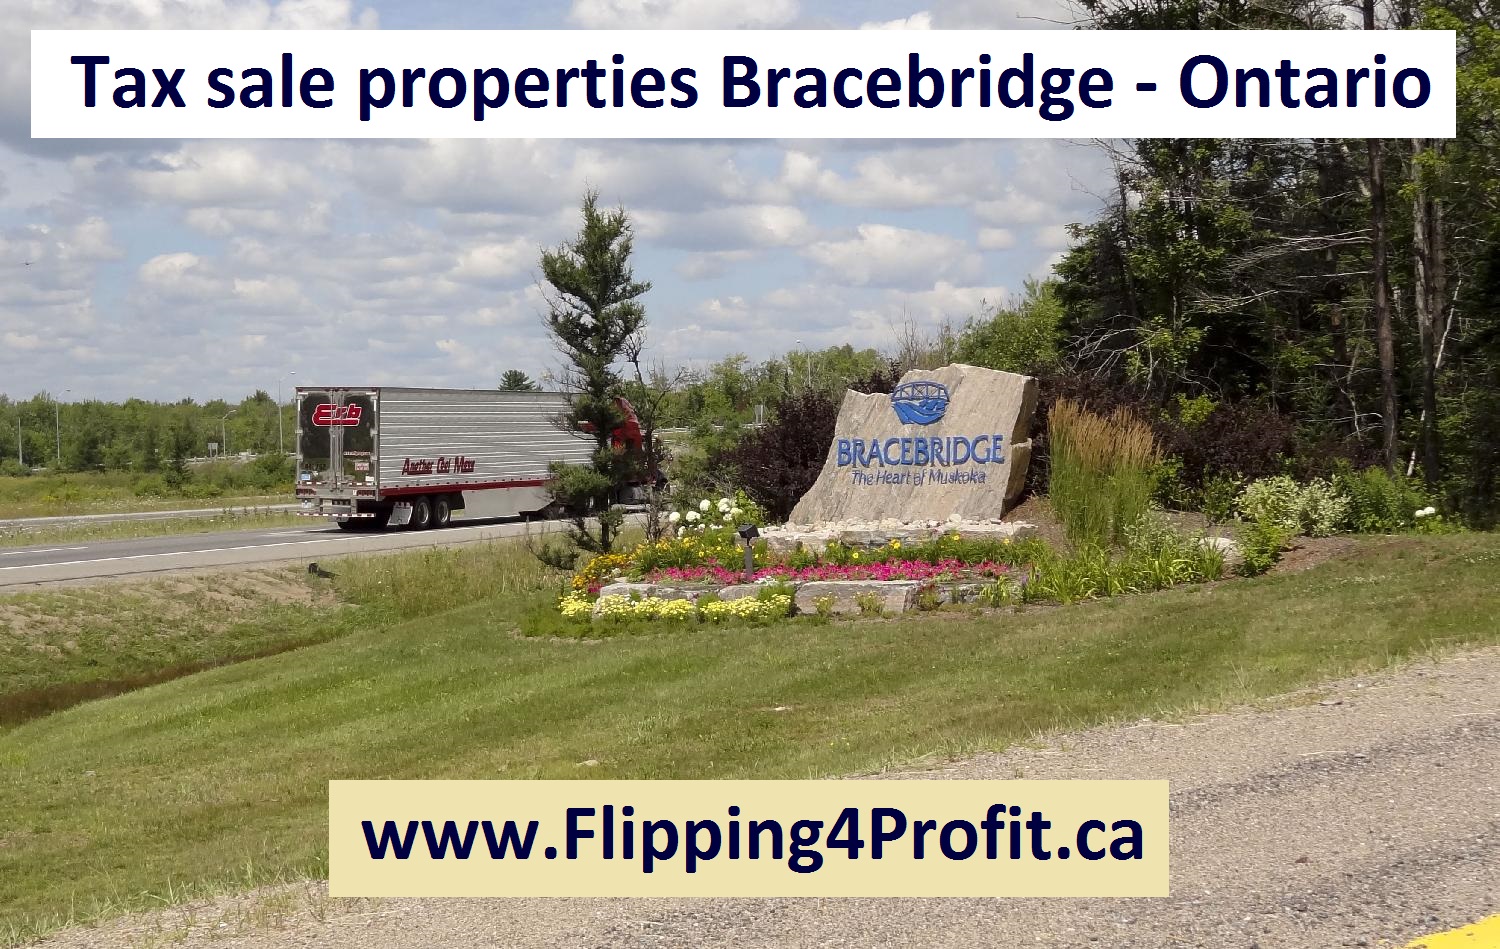 July 28, 2016 Tax sale properties Bracebridge - Ontario